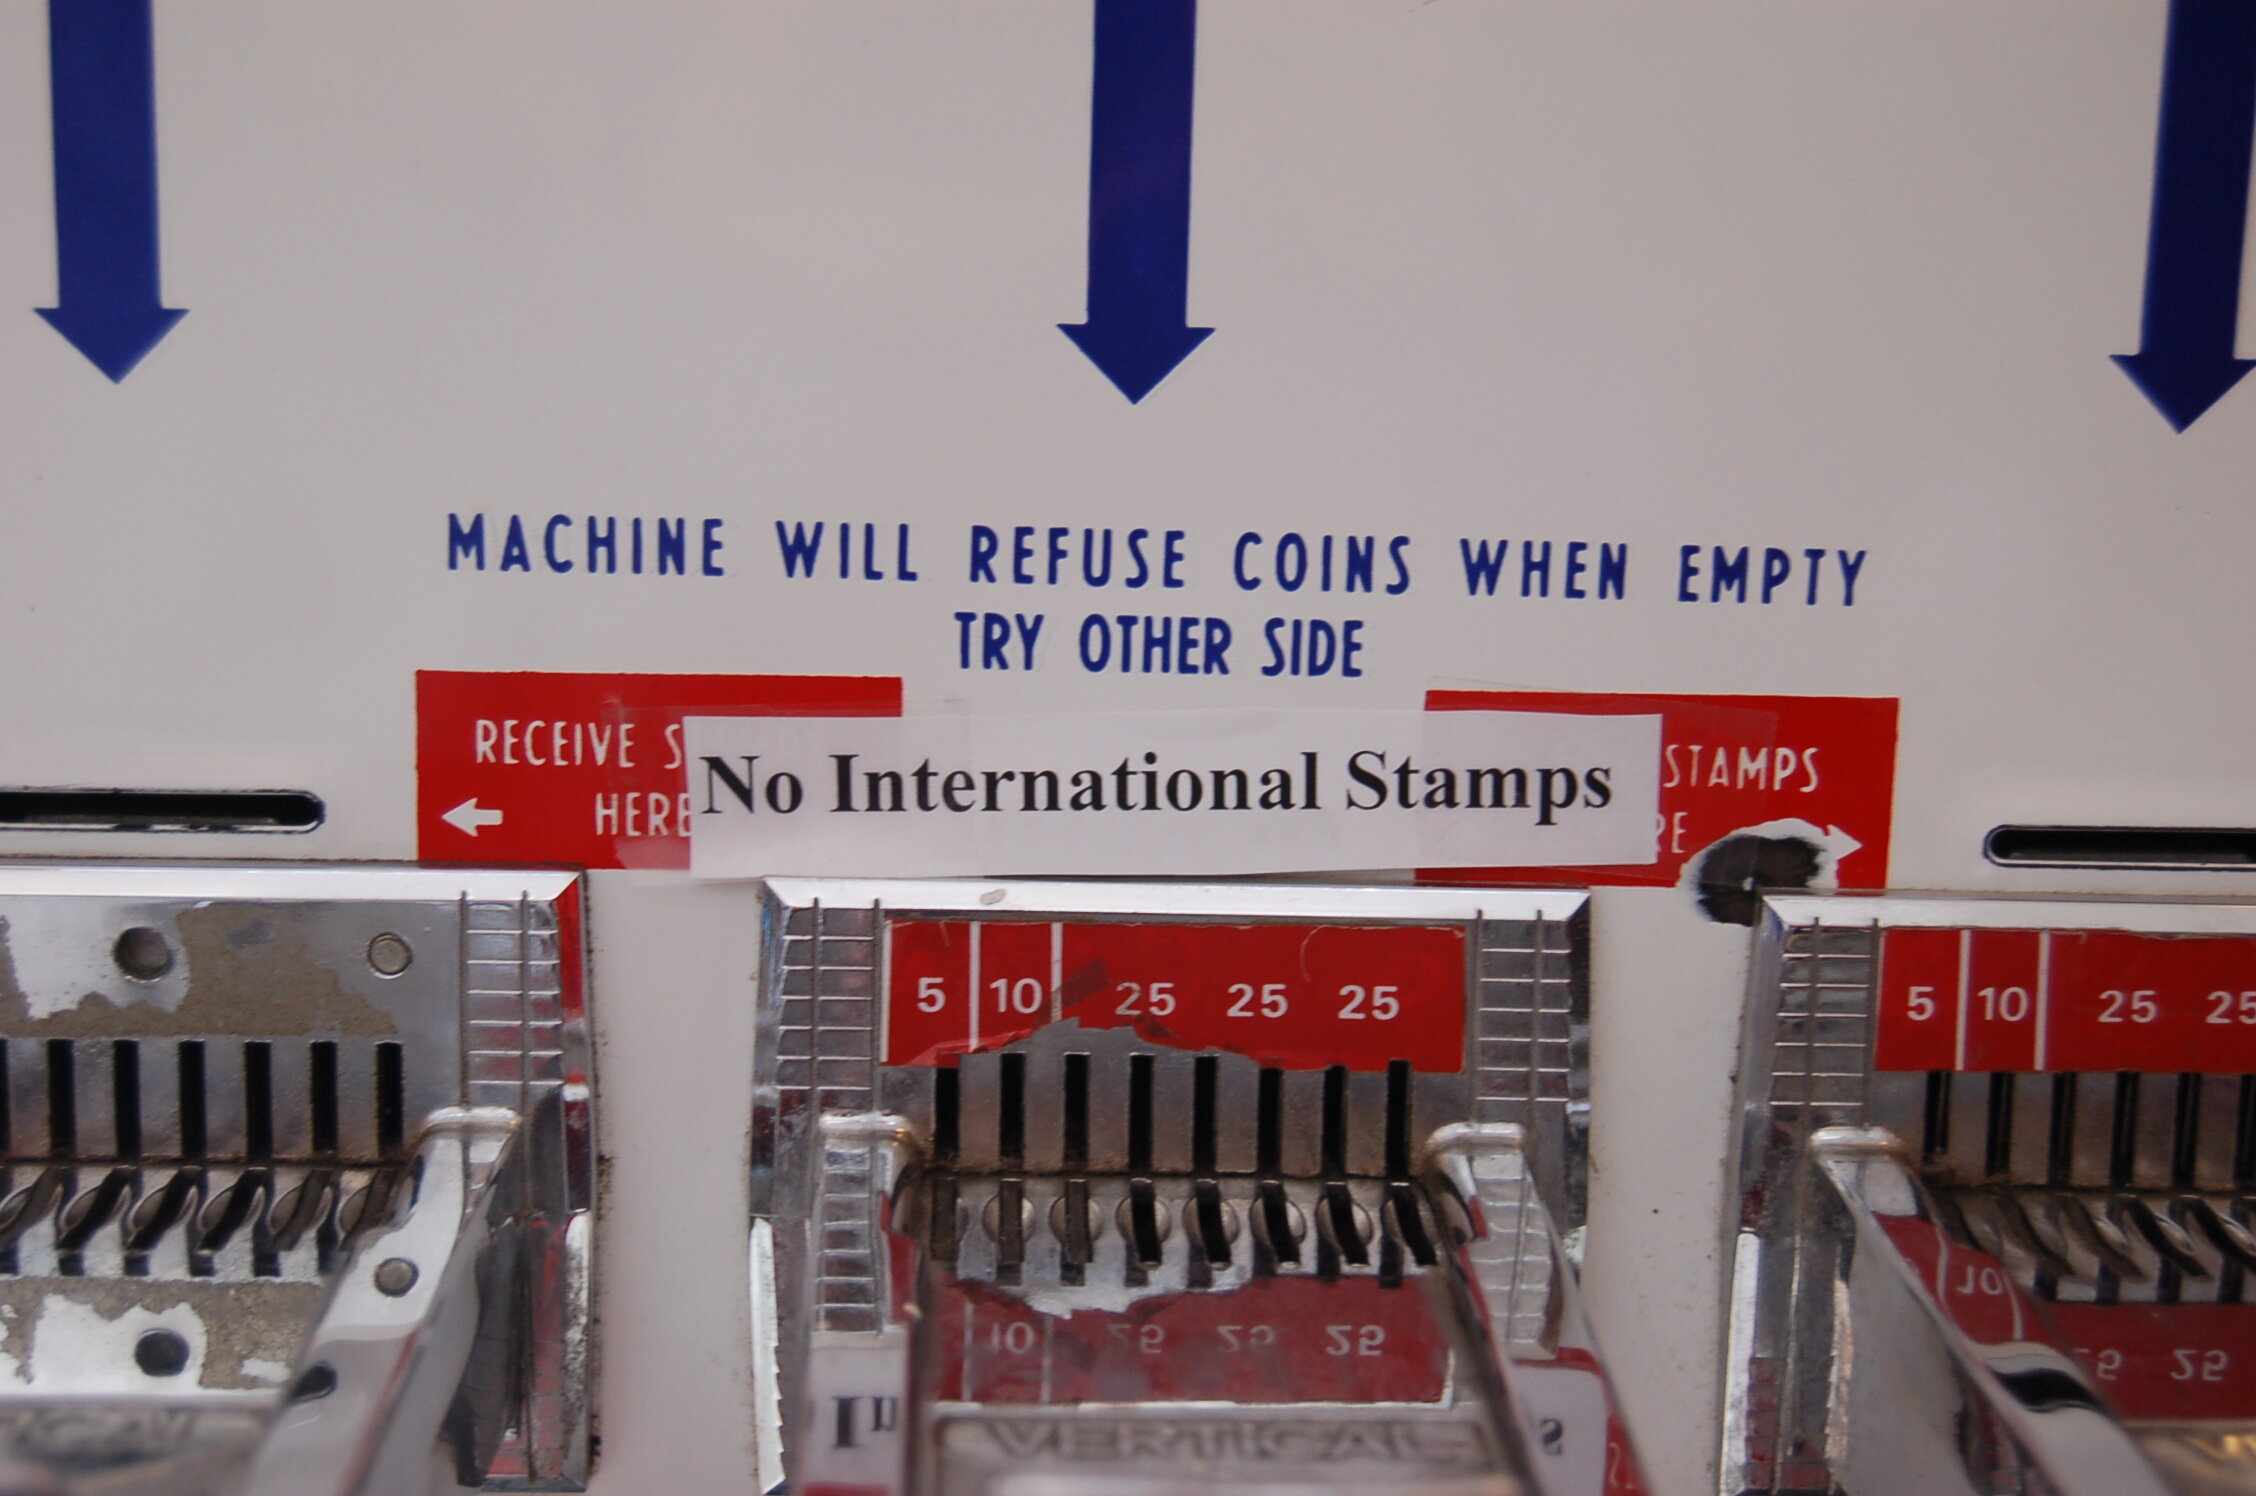 Boston Stamp machine by Carrie Crocker